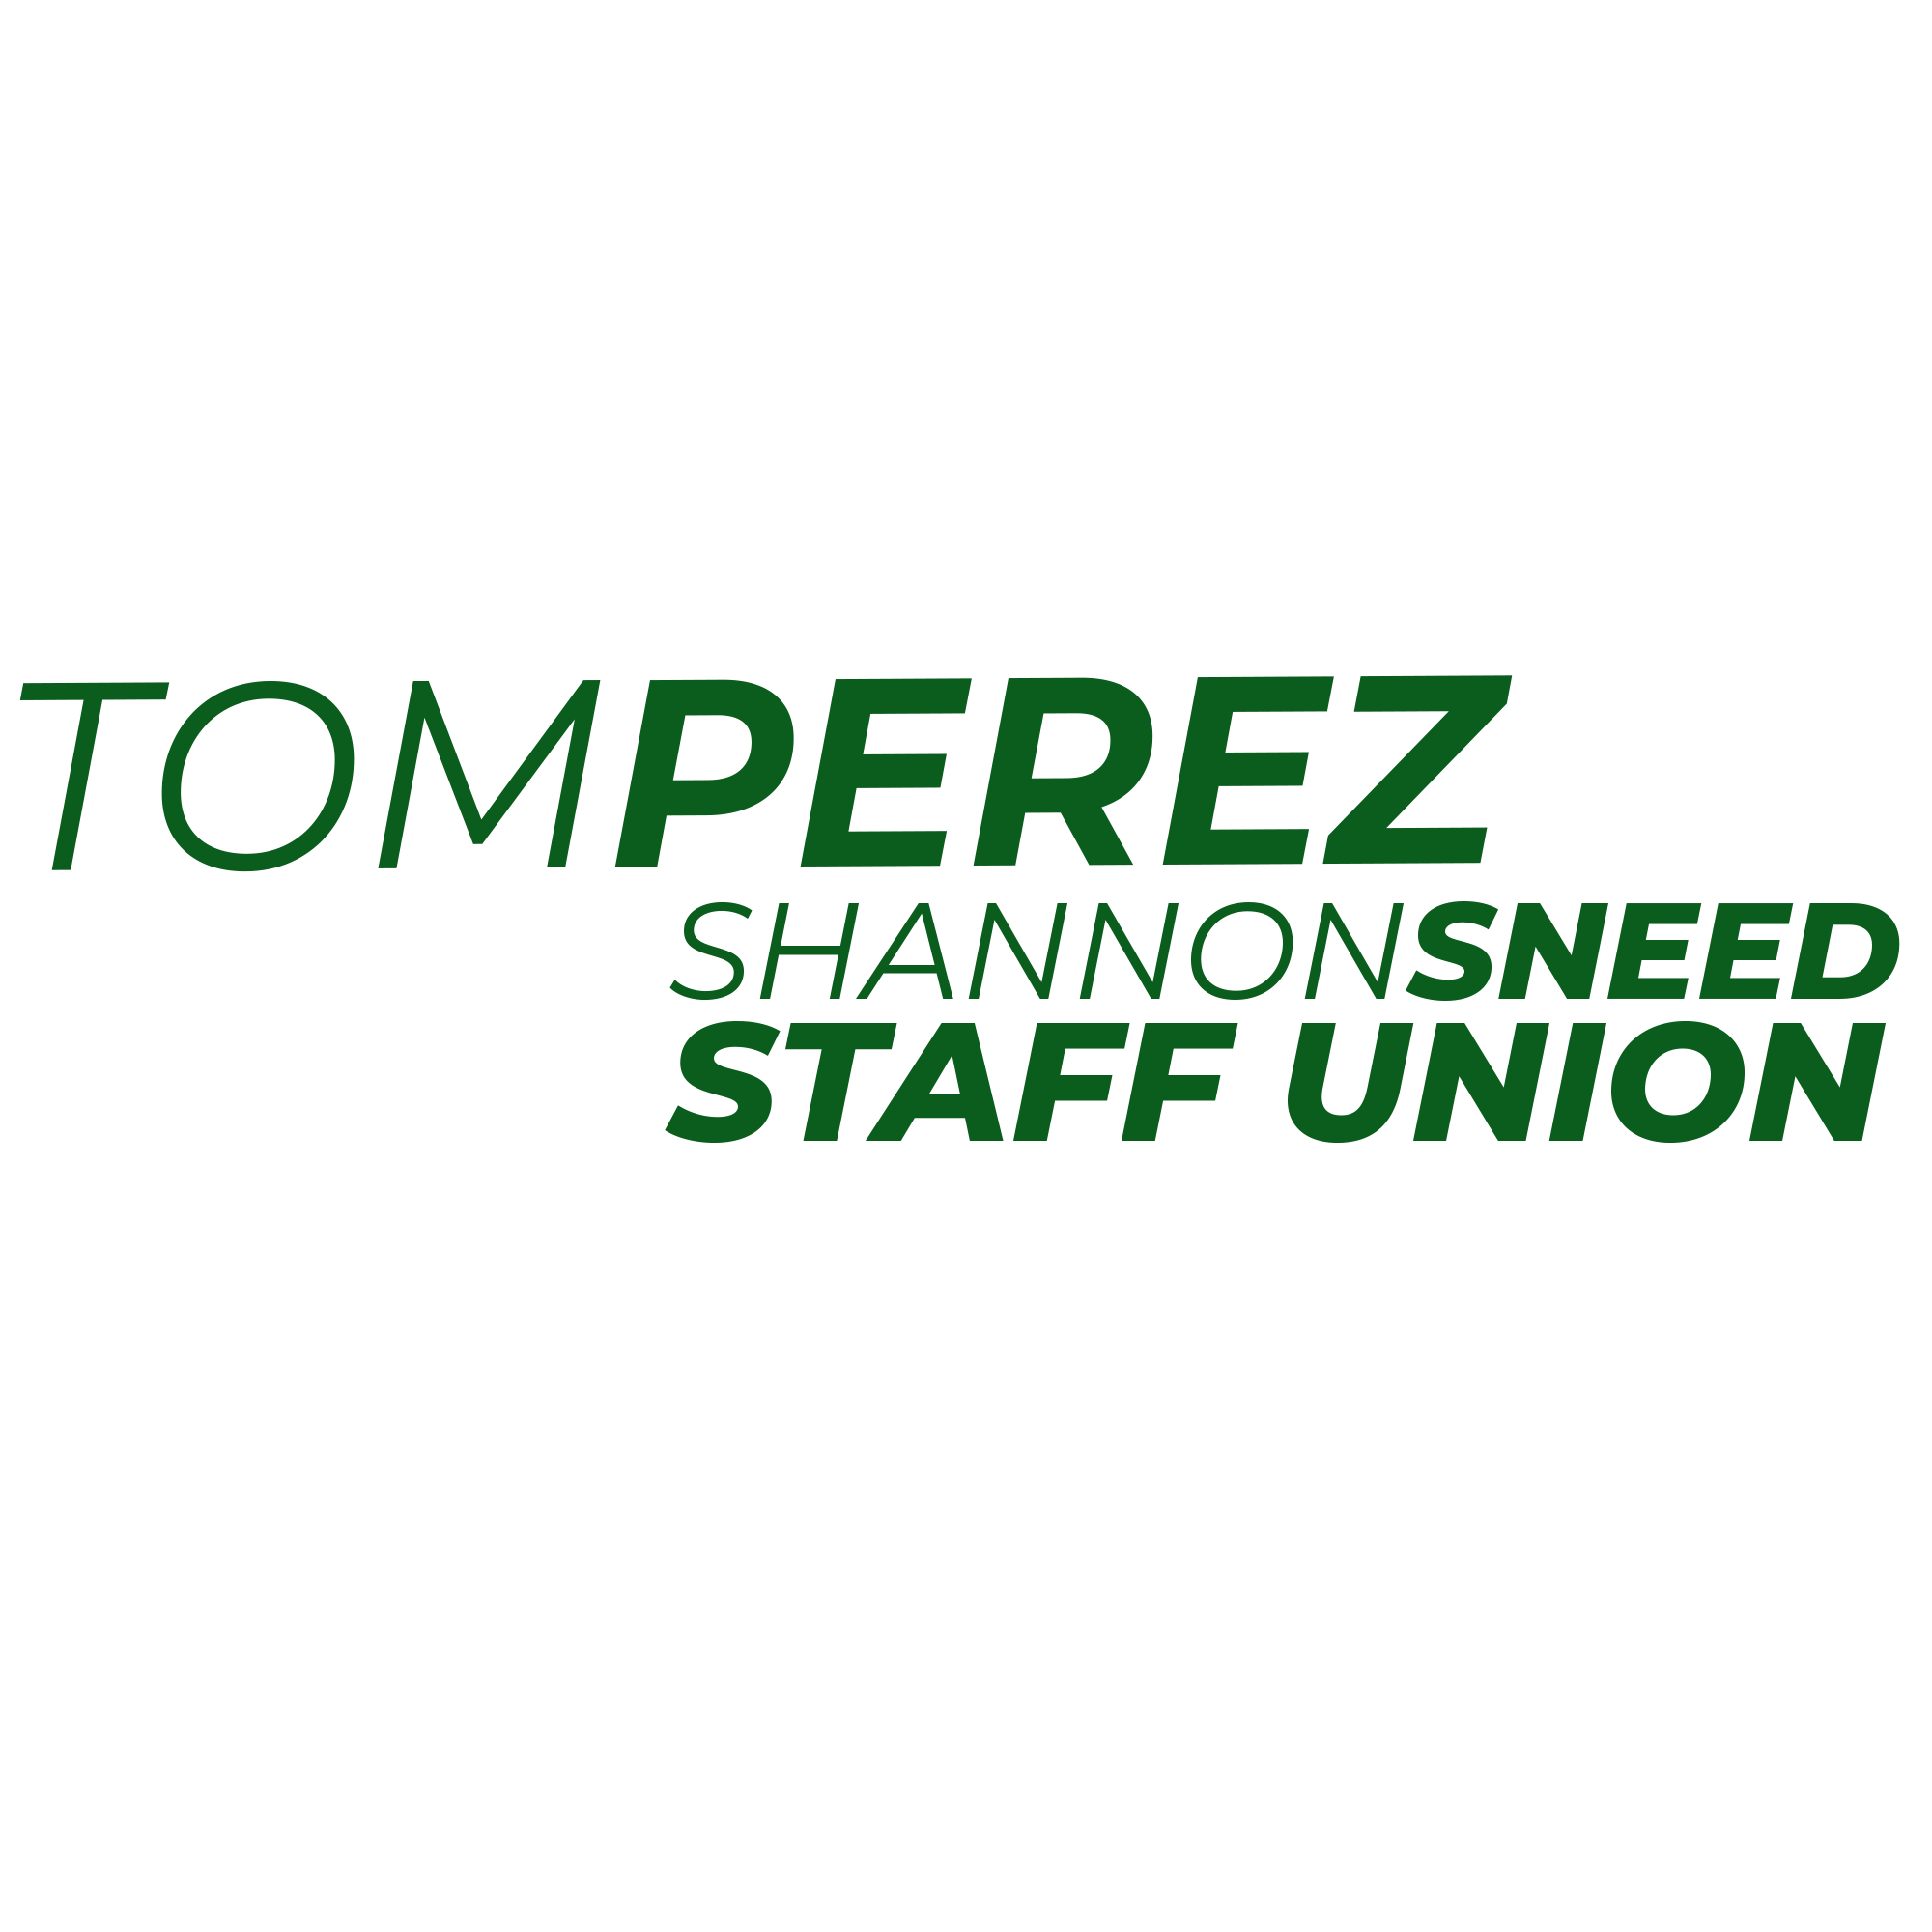 Staff Union - Tom Perez.png